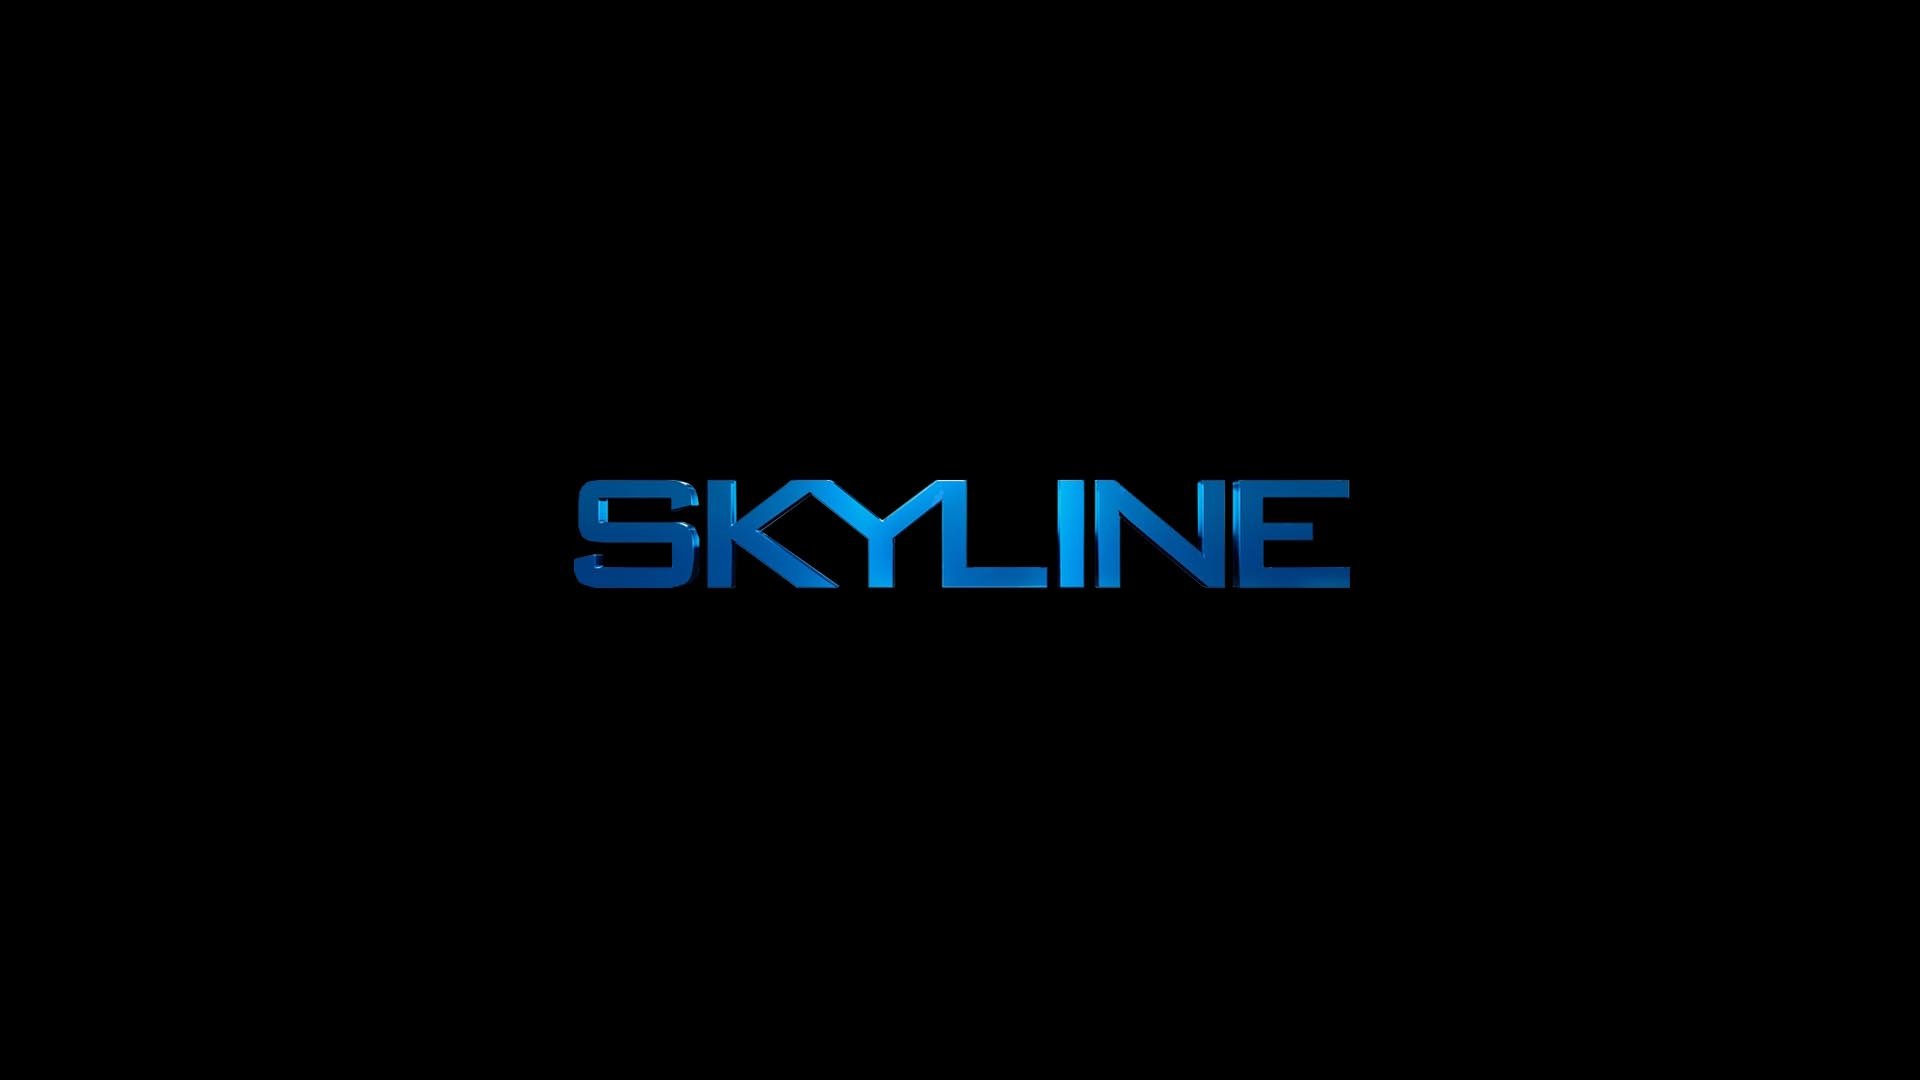 Free download Skyline wallpaper ID:354138 1080p for desktop